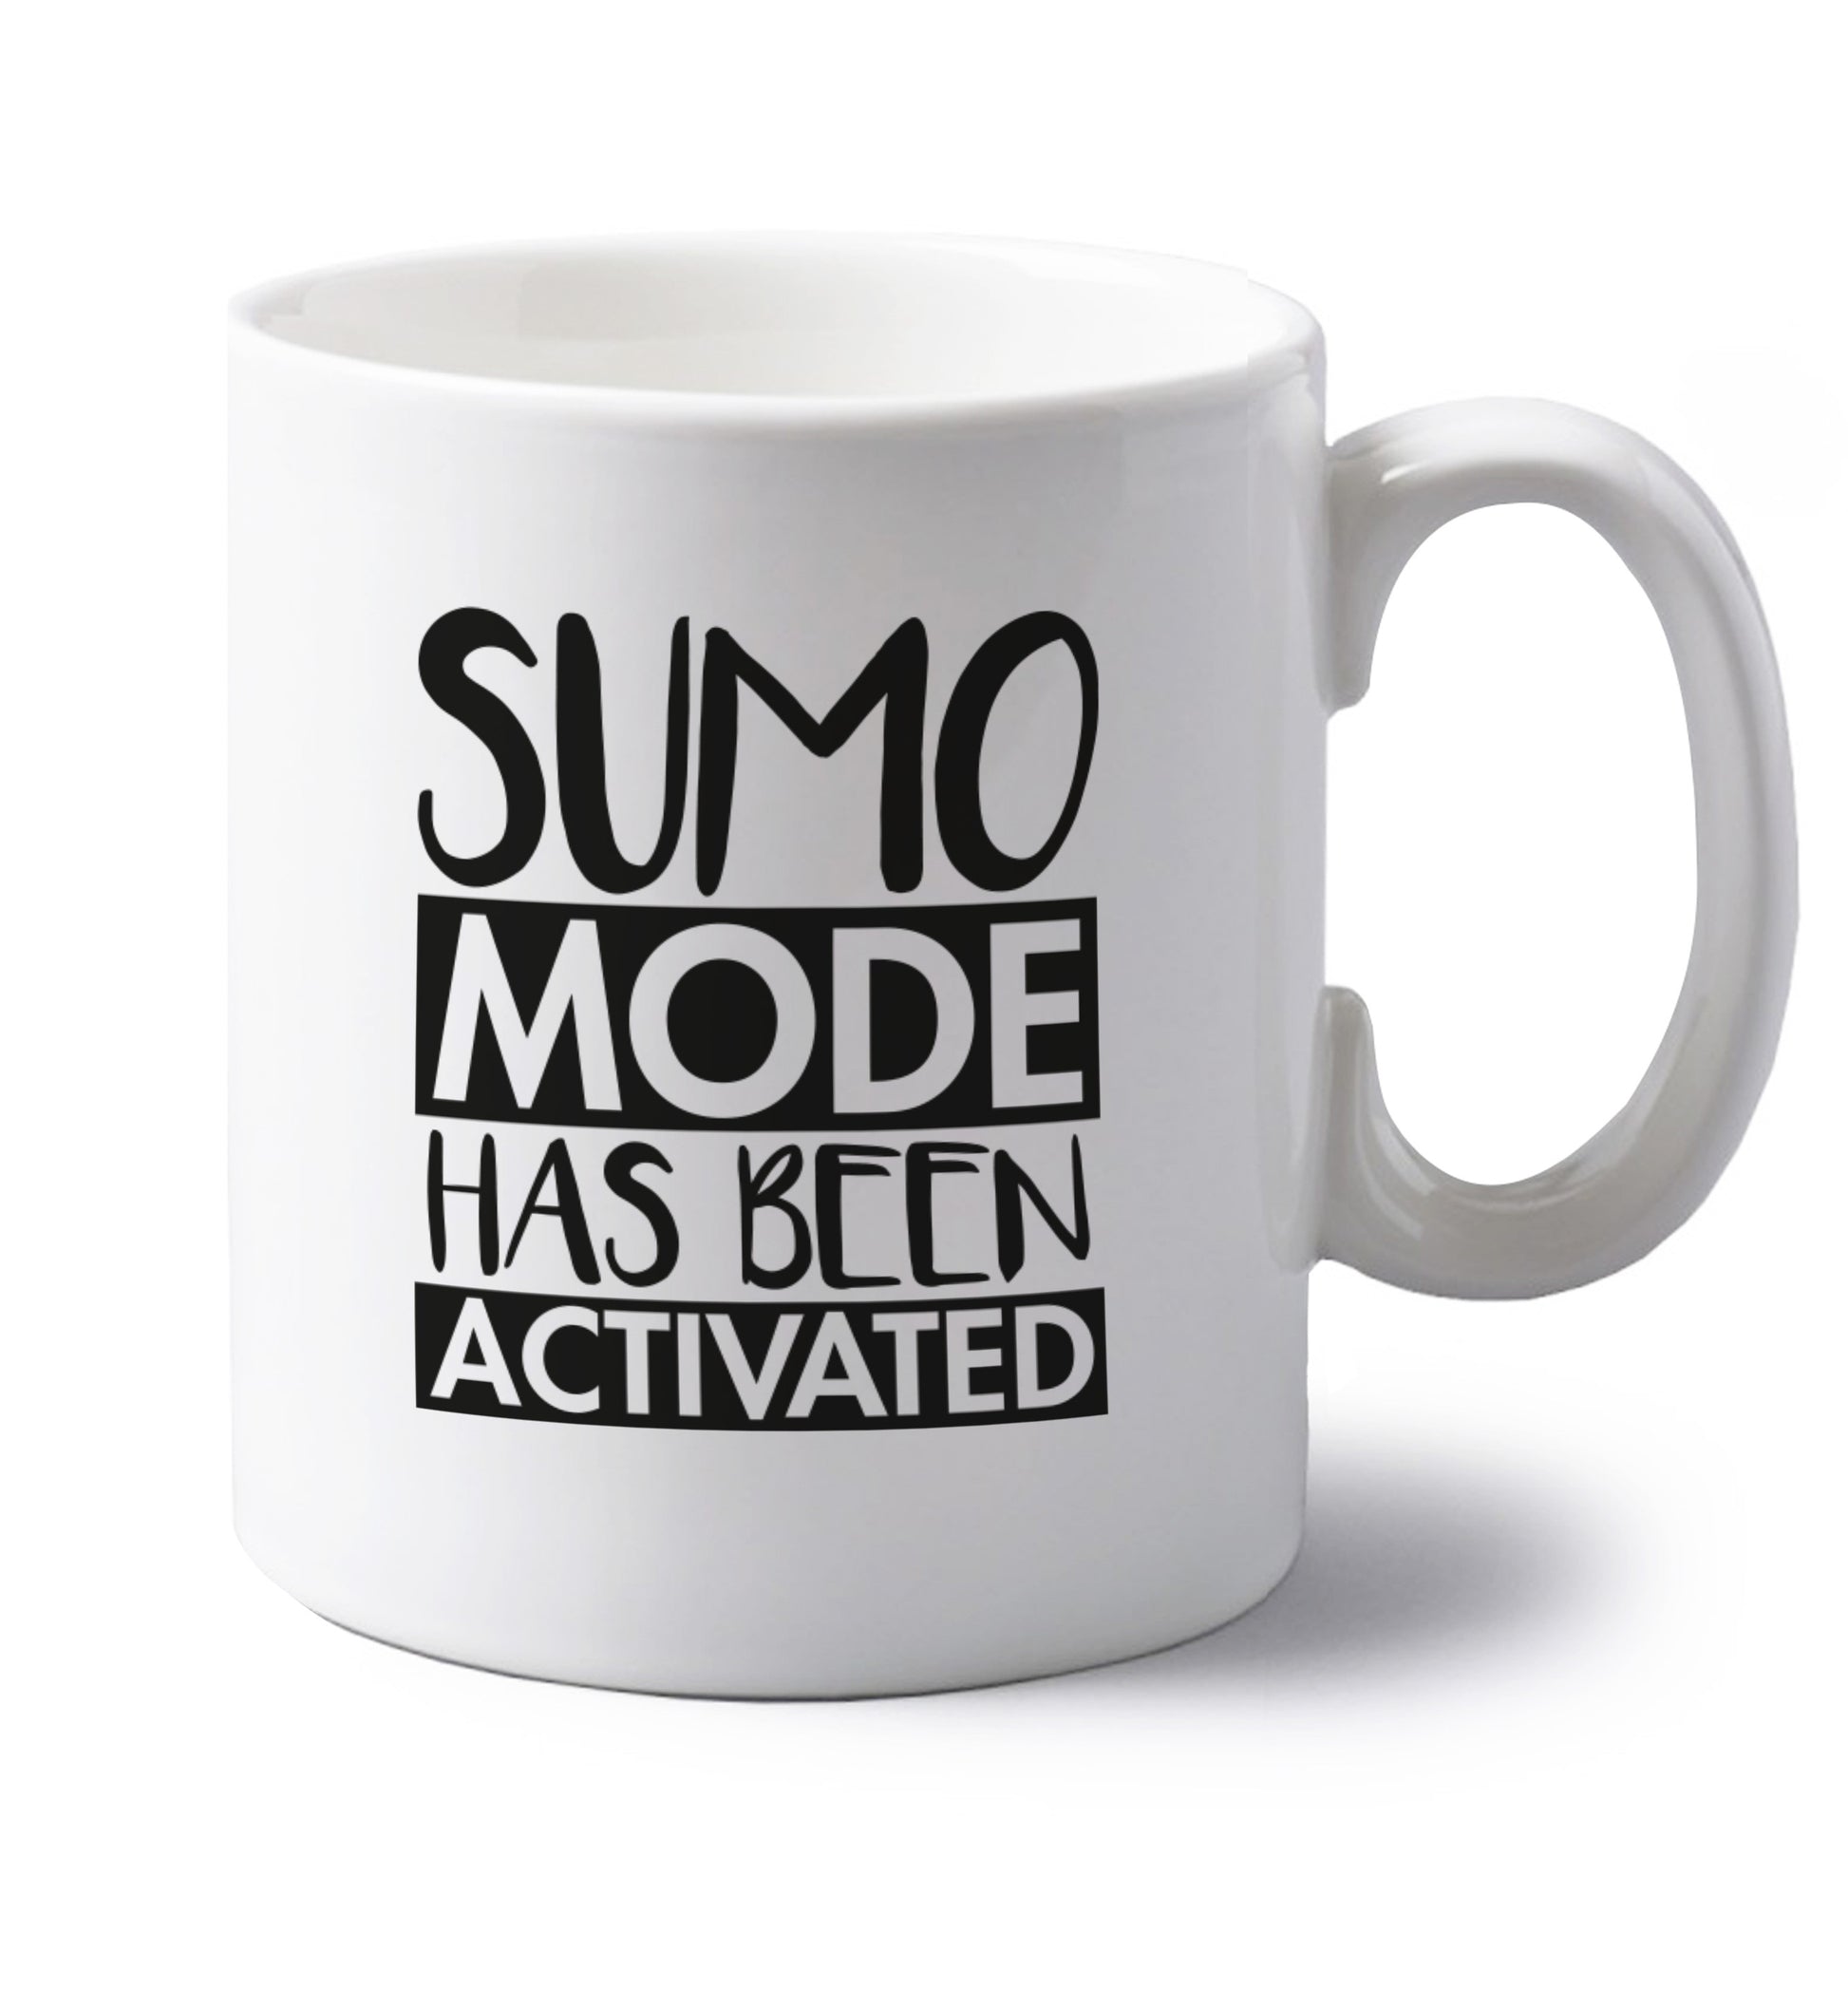 Sumo mode activated left handed white ceramic mug 